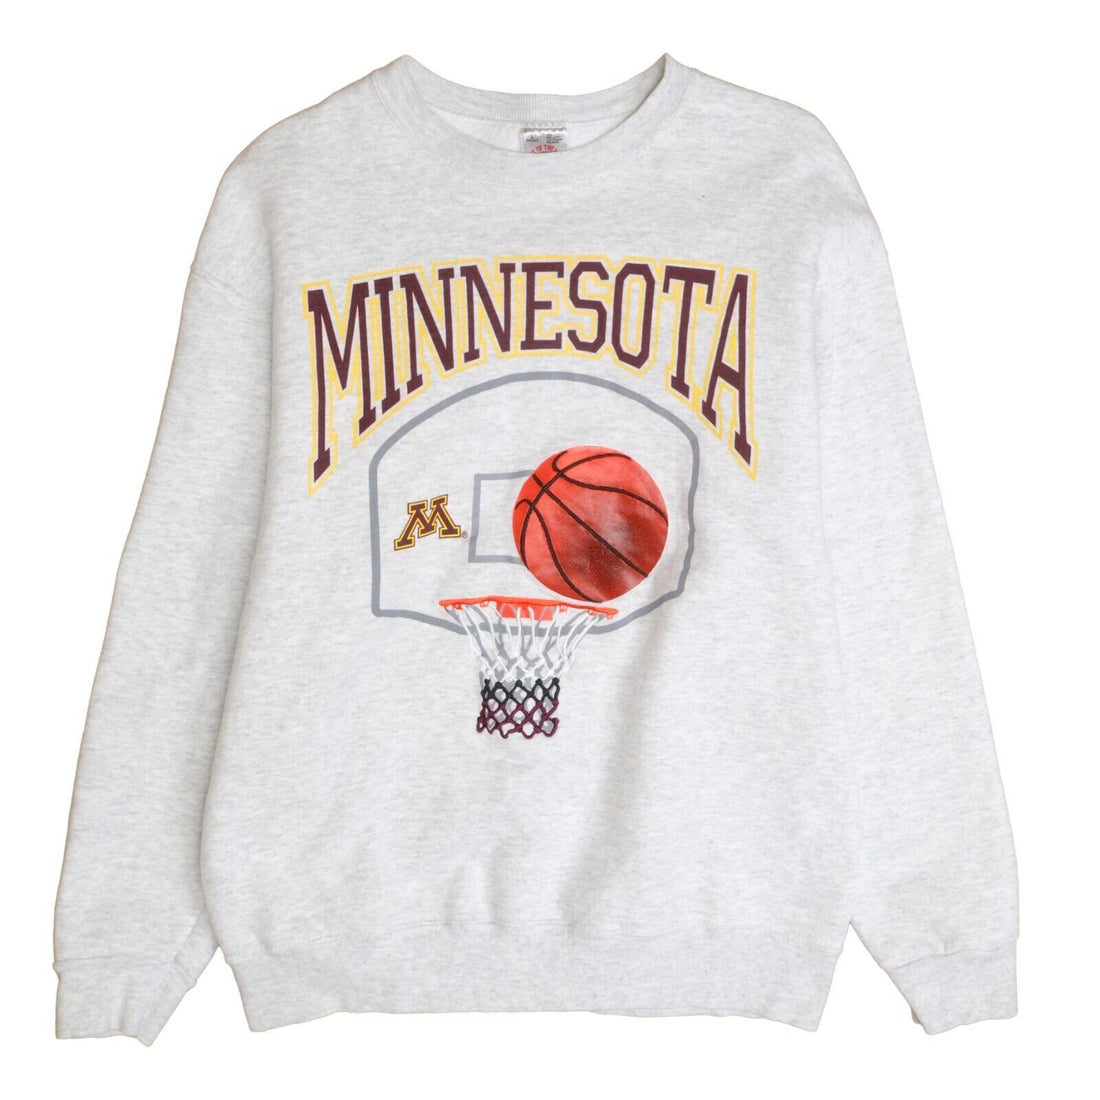 Vintage Minnesota Golden Gophers Basketball Sweatshirt Crewneck Large 90s NCAA